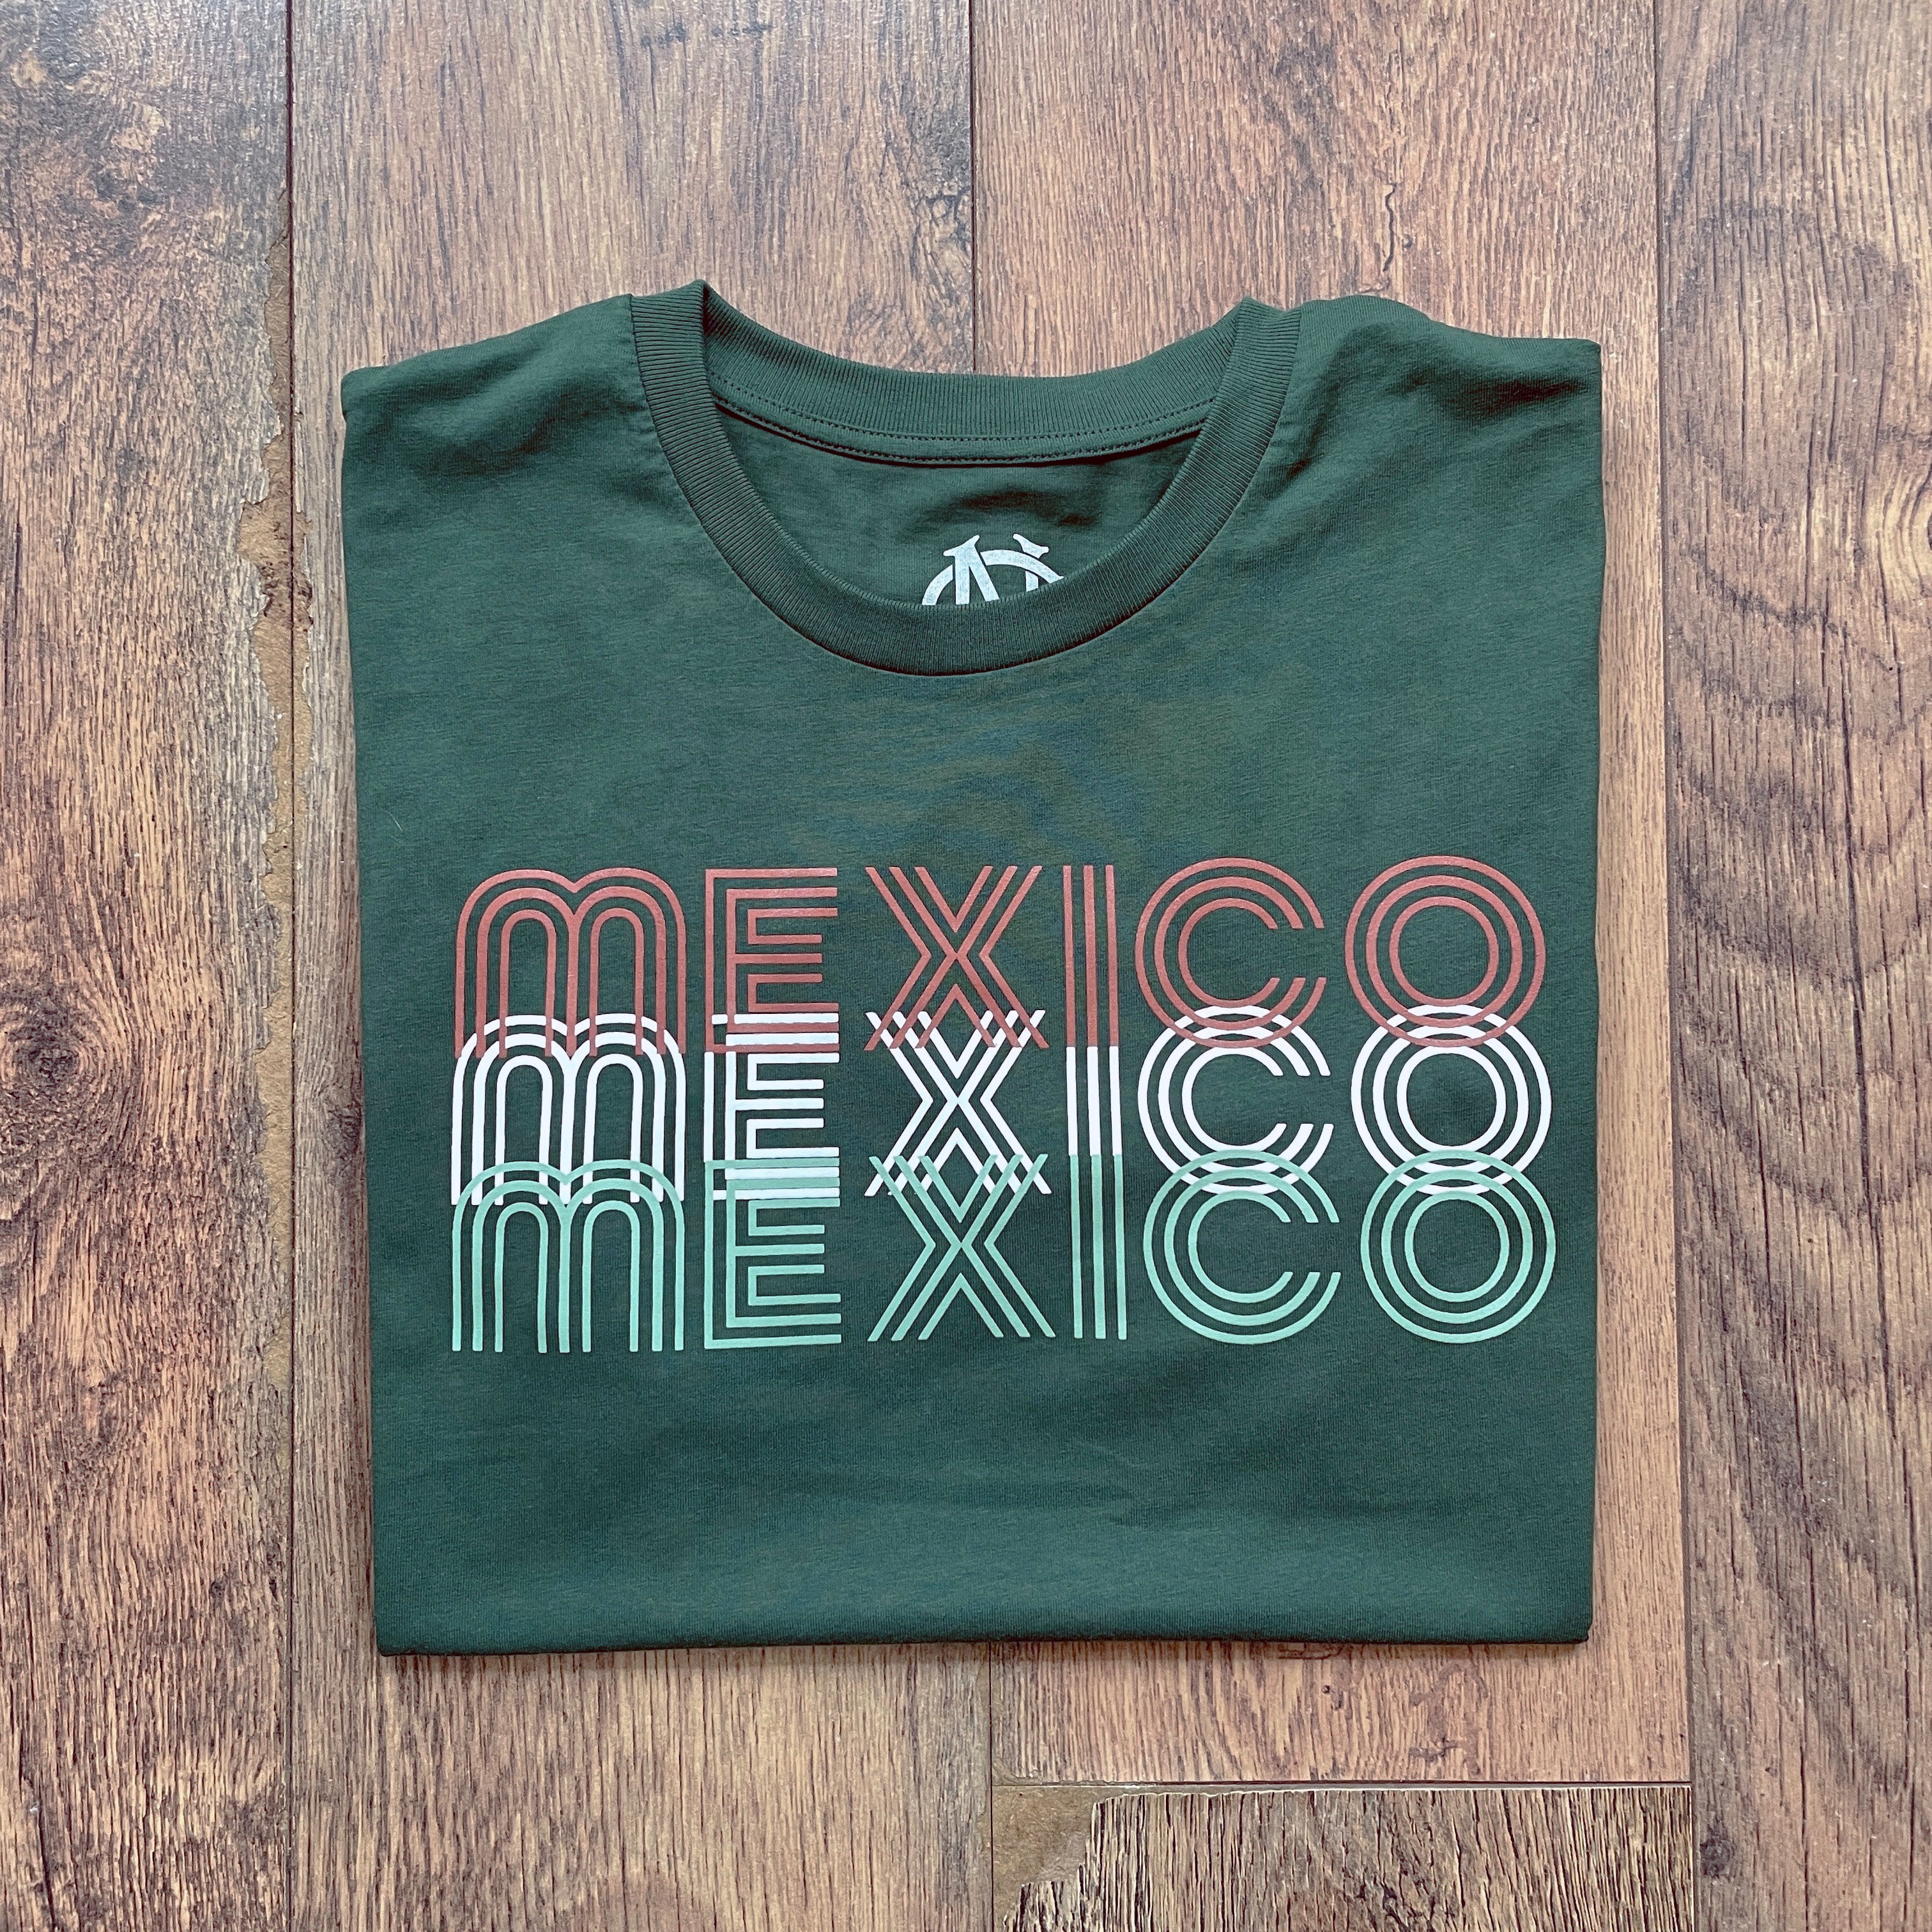 Mexico football shirt t-shirt